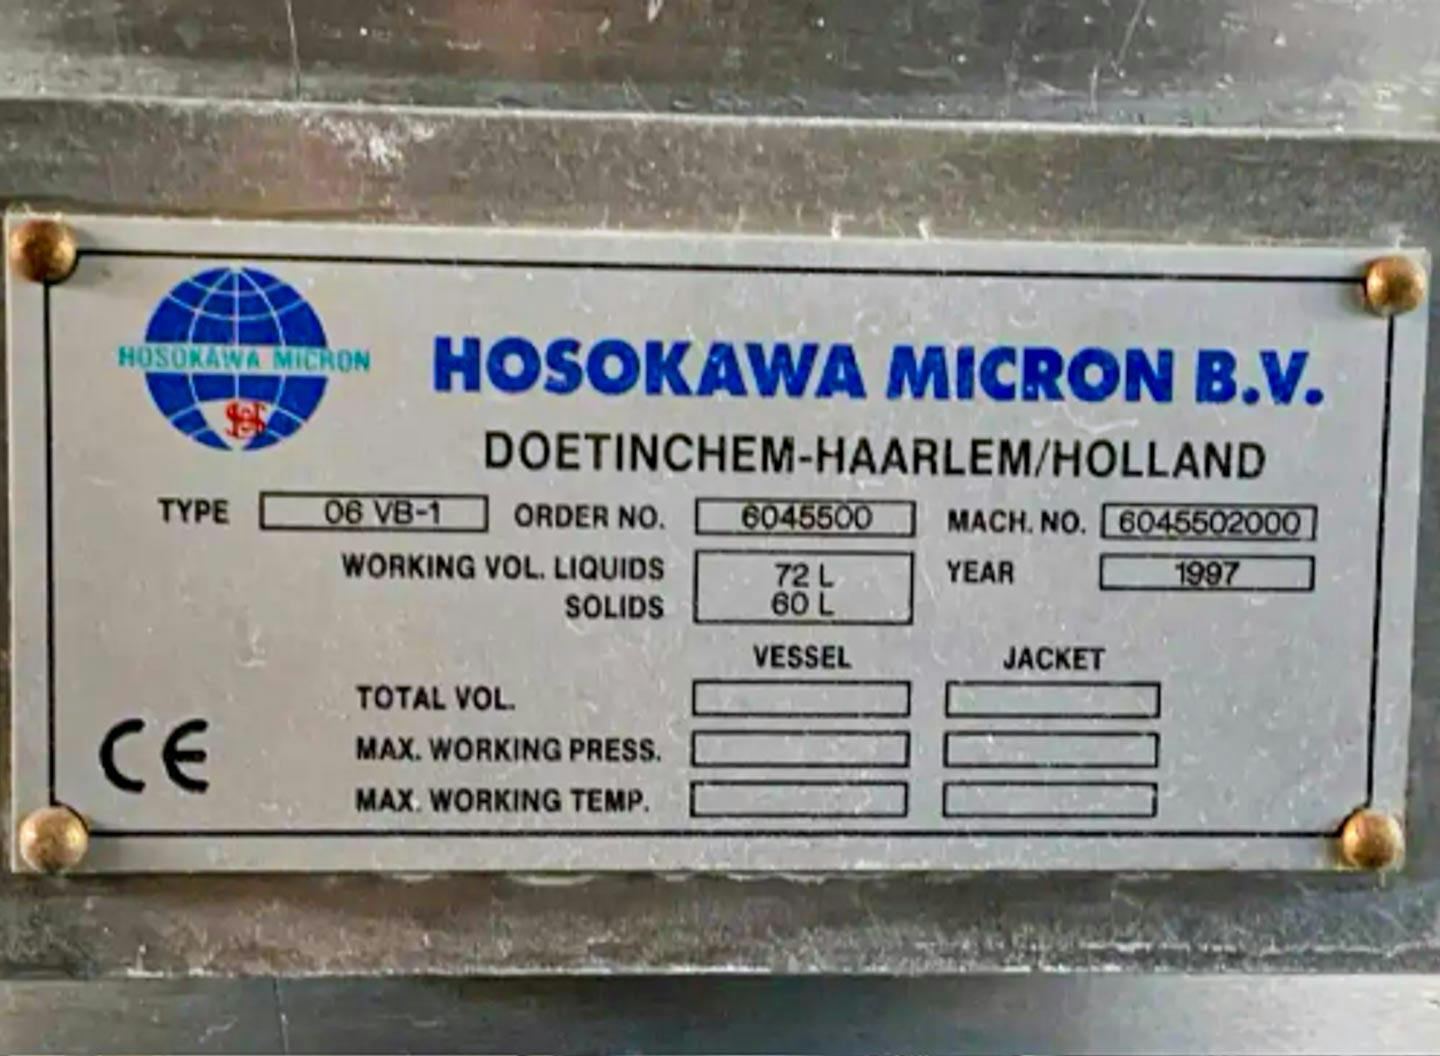 Hosokawa Micron 06-VB-1 - Conical mixer - image 8